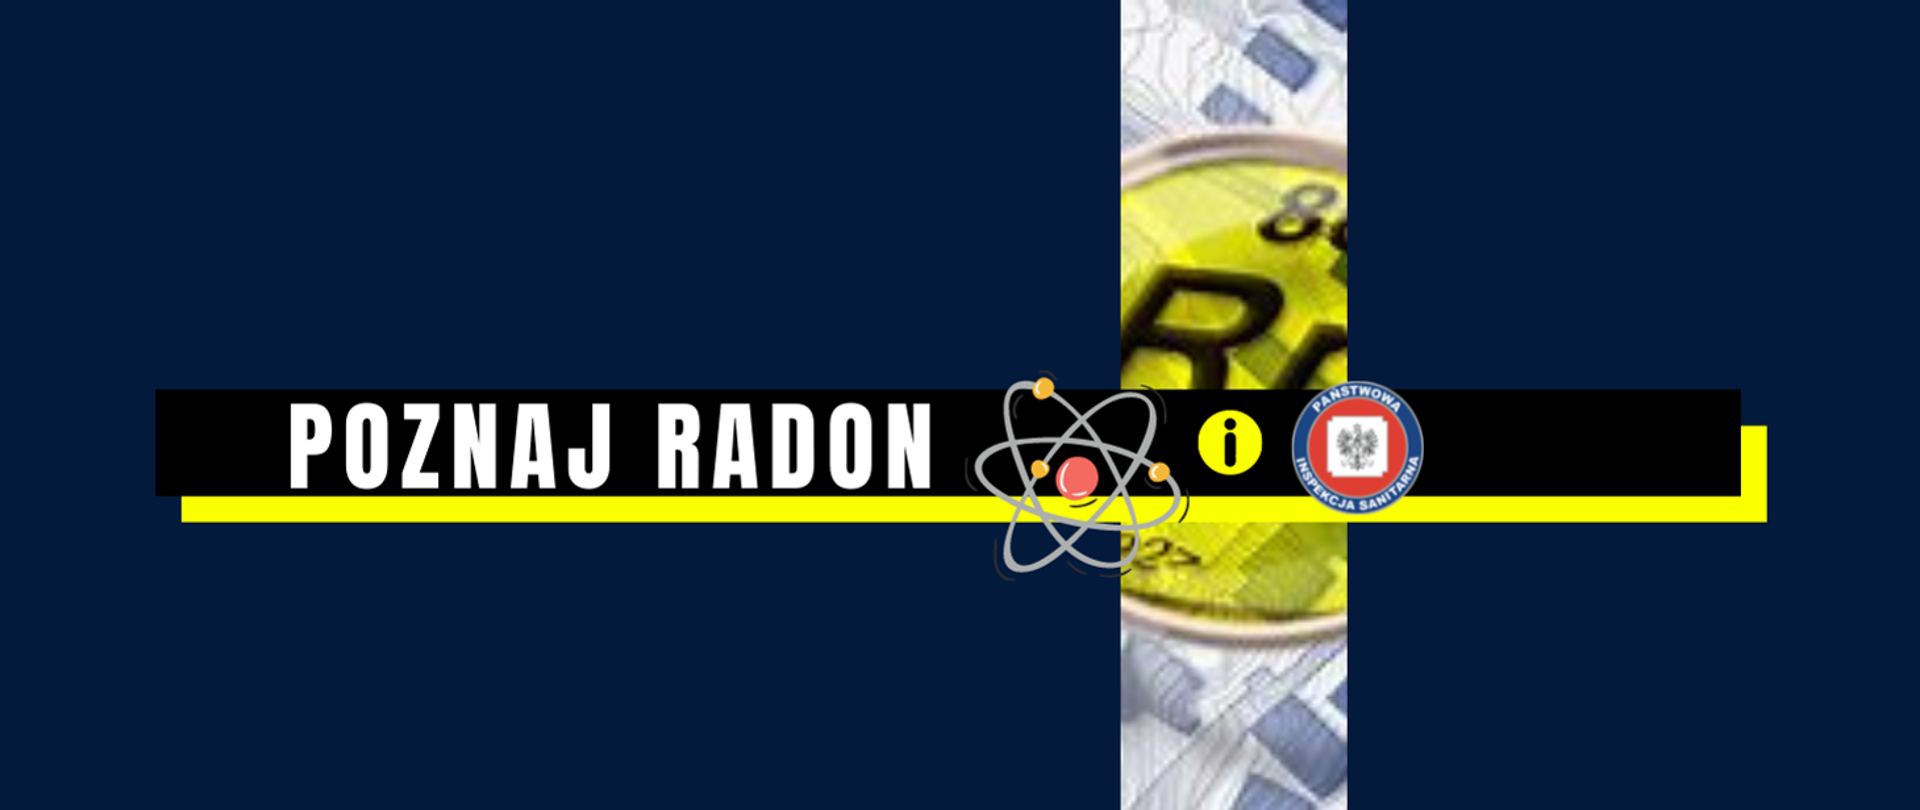 Radon logo